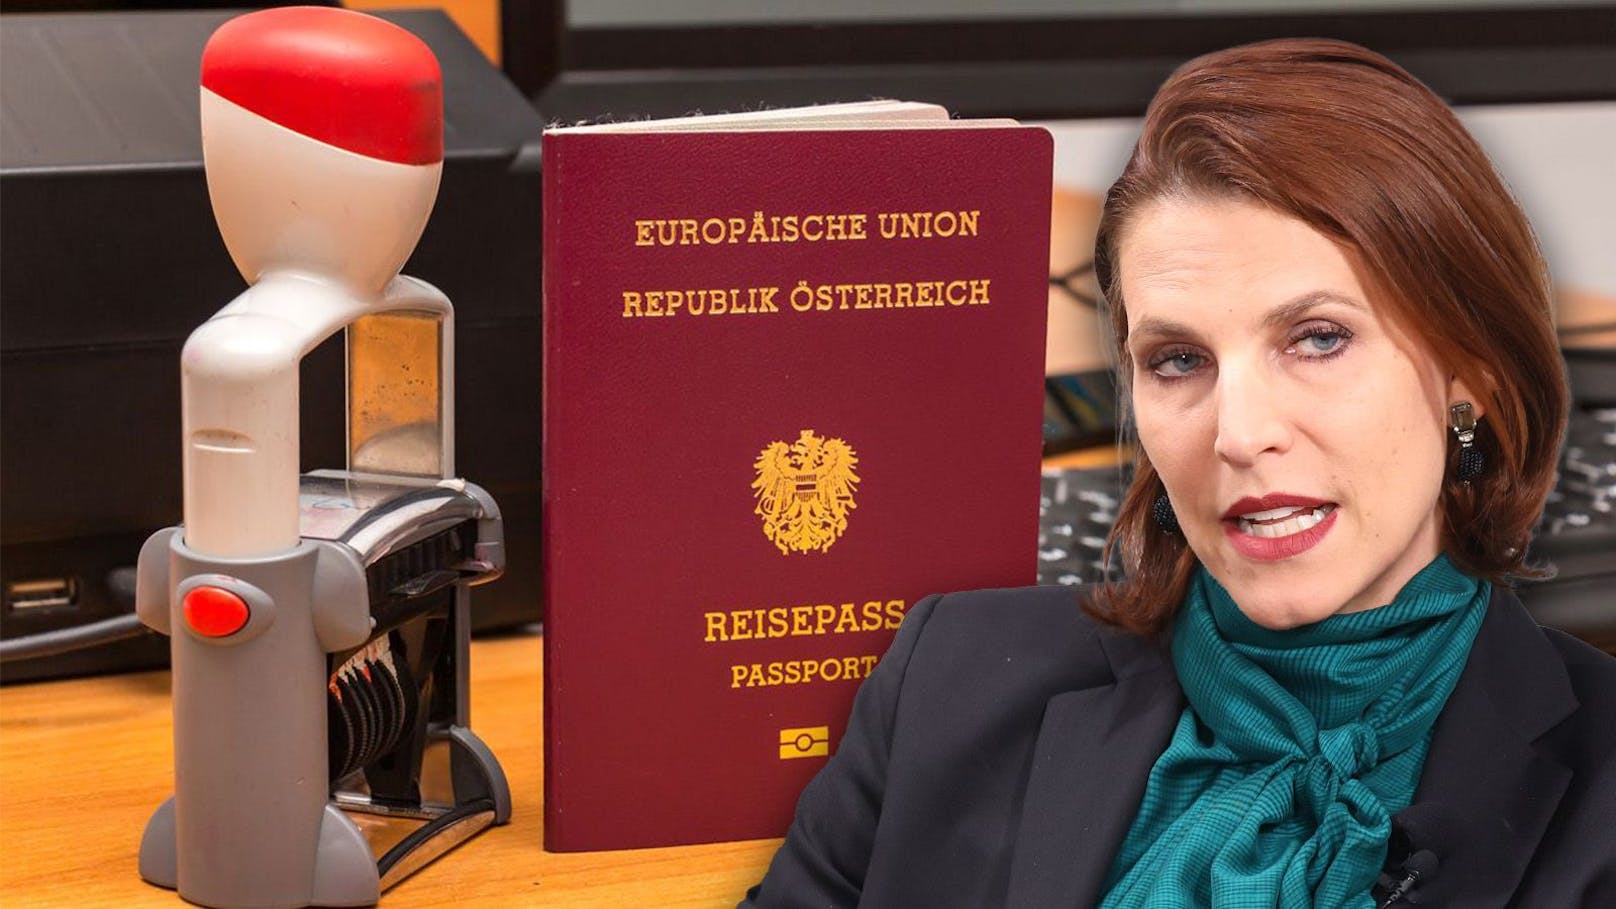 "Nicht verschenken" – ÖVP-Ansage zu Staatsbürgerschaft